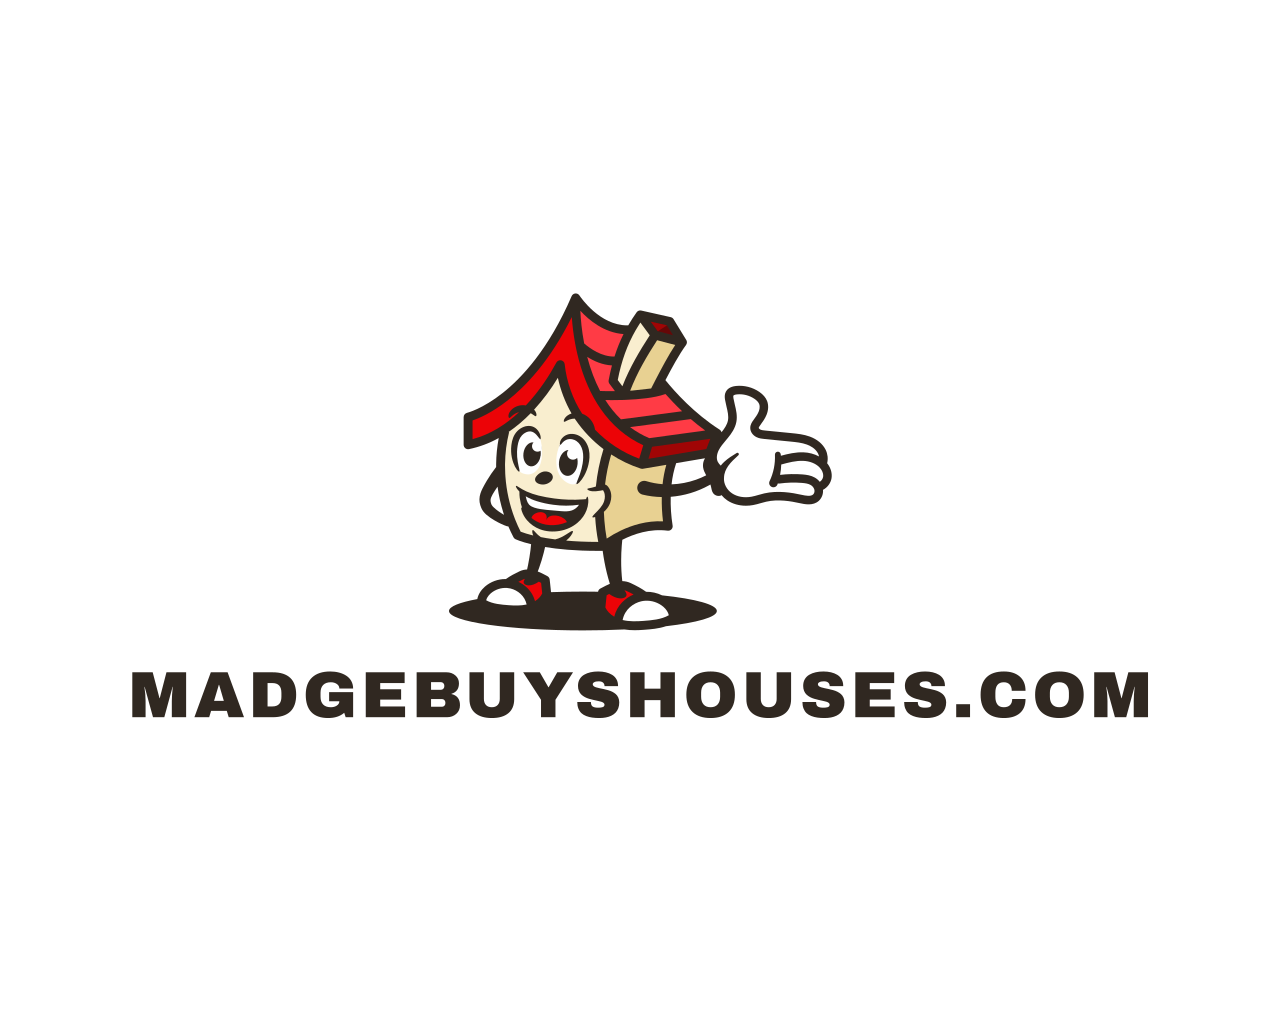 Madge Has Homes! logo